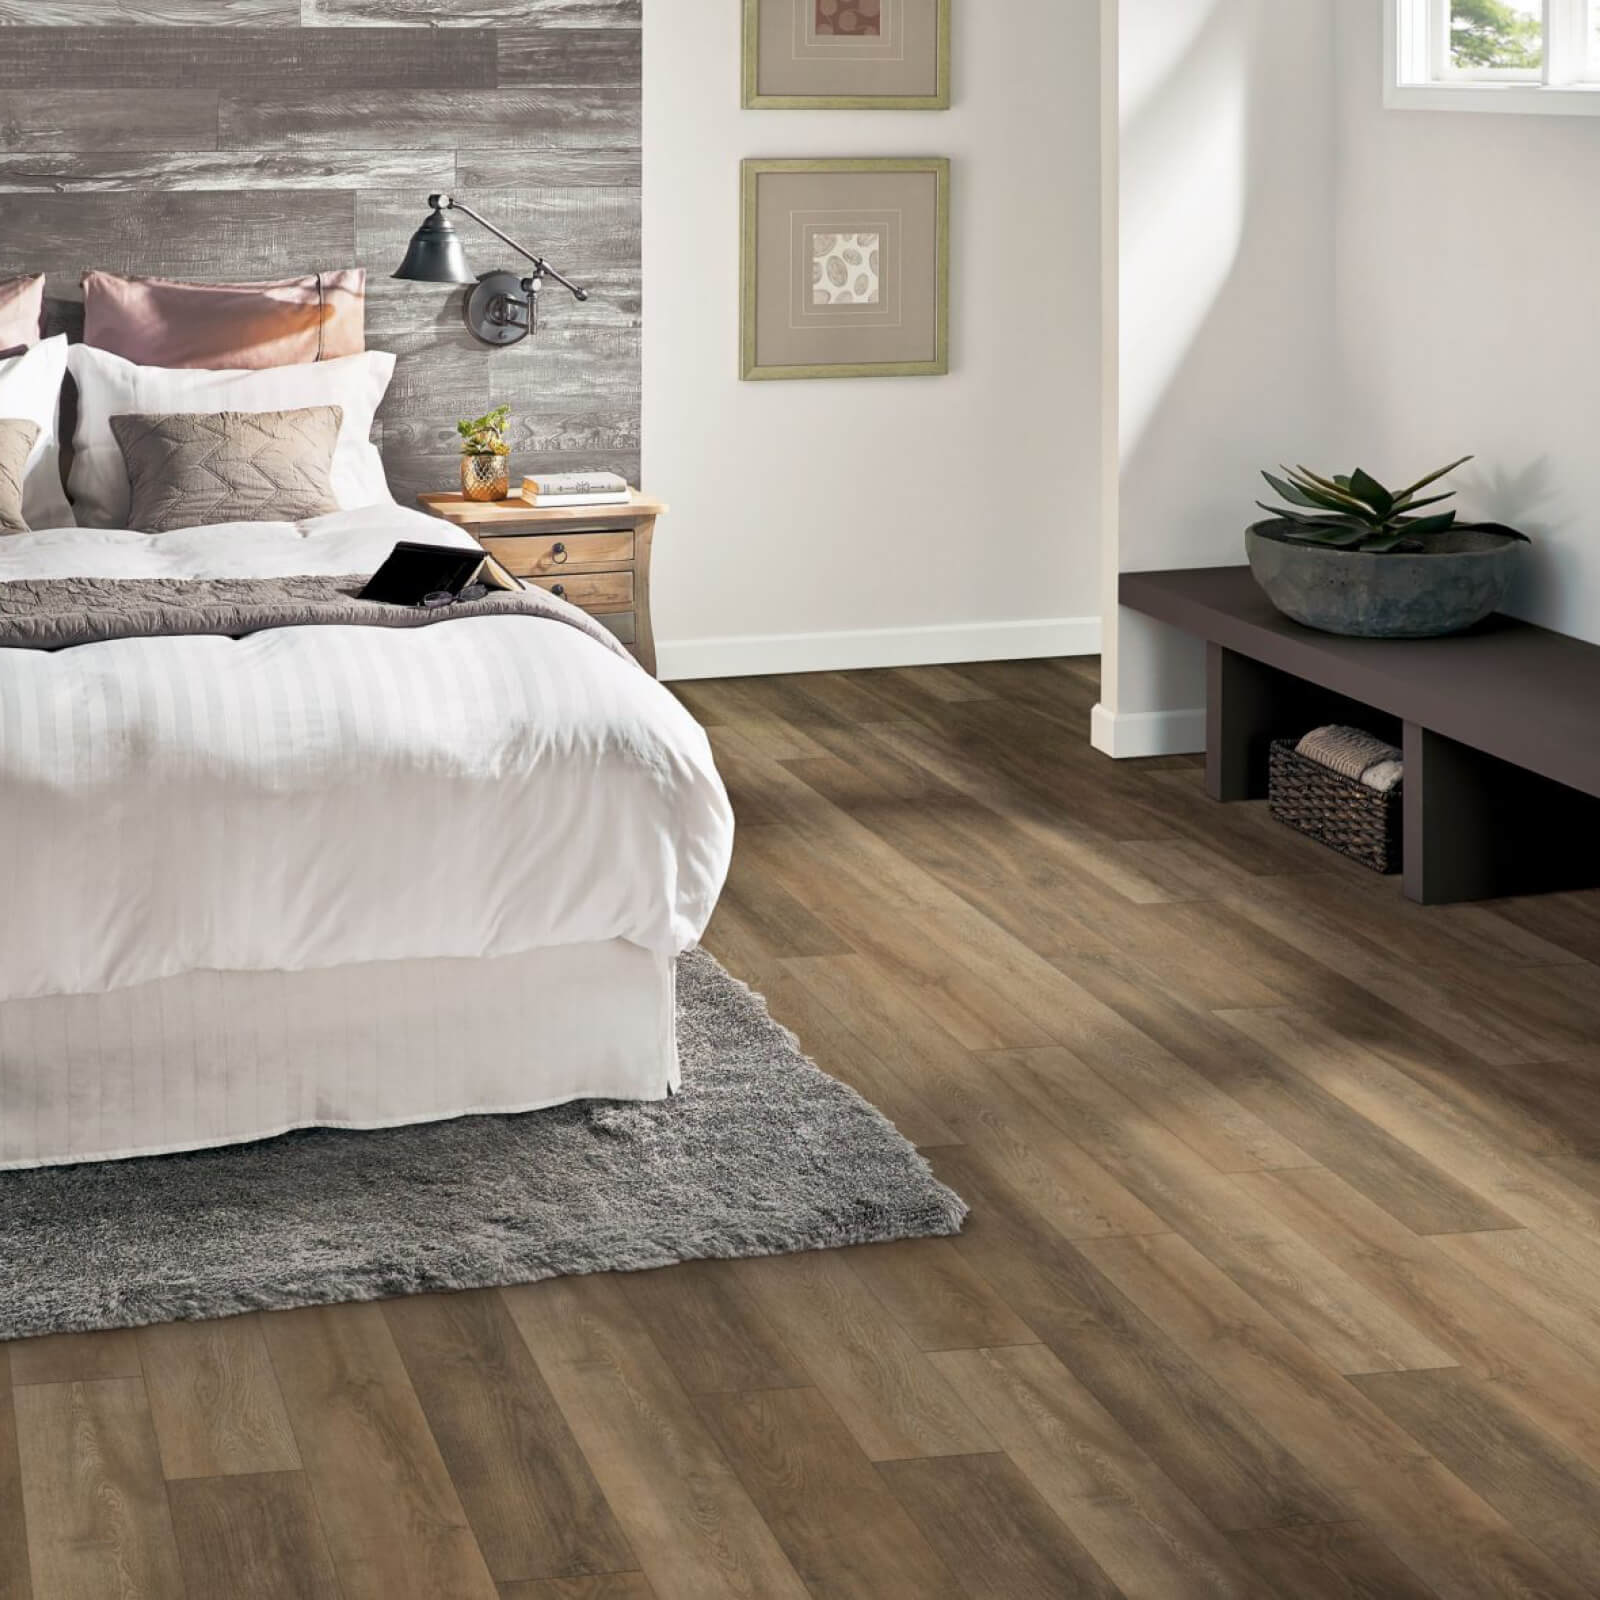 Luxury vinyl flooring in bedroom | Emo Flooring company